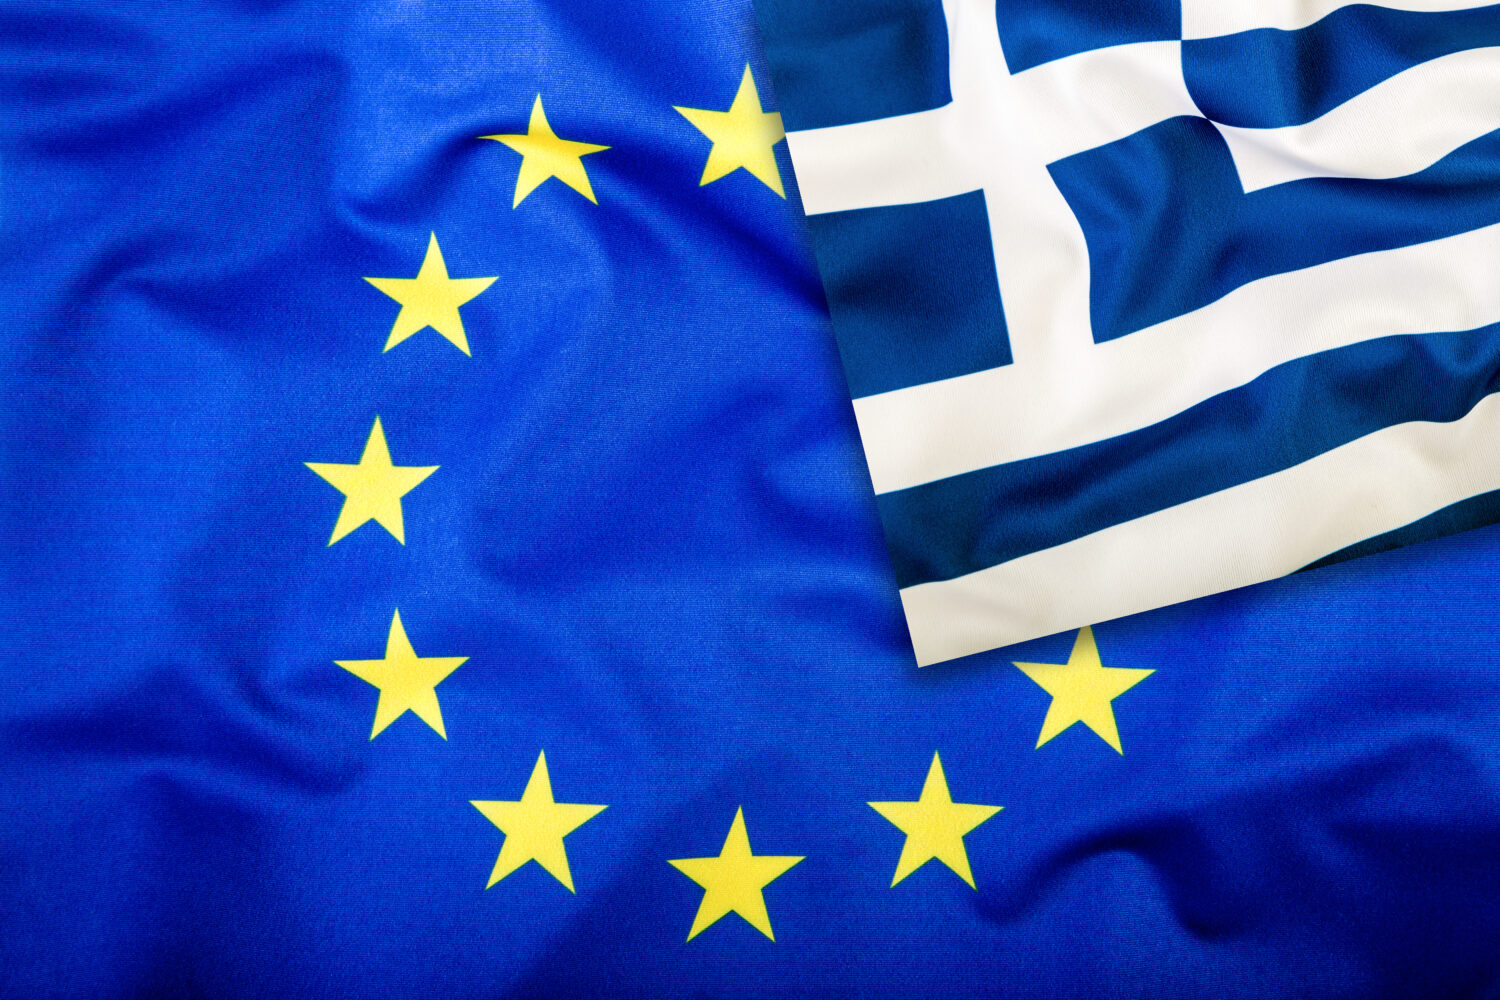 Flags of the Greece and the European Union. Greece Flag and EU Flag. Flag inside stars. World flag concept